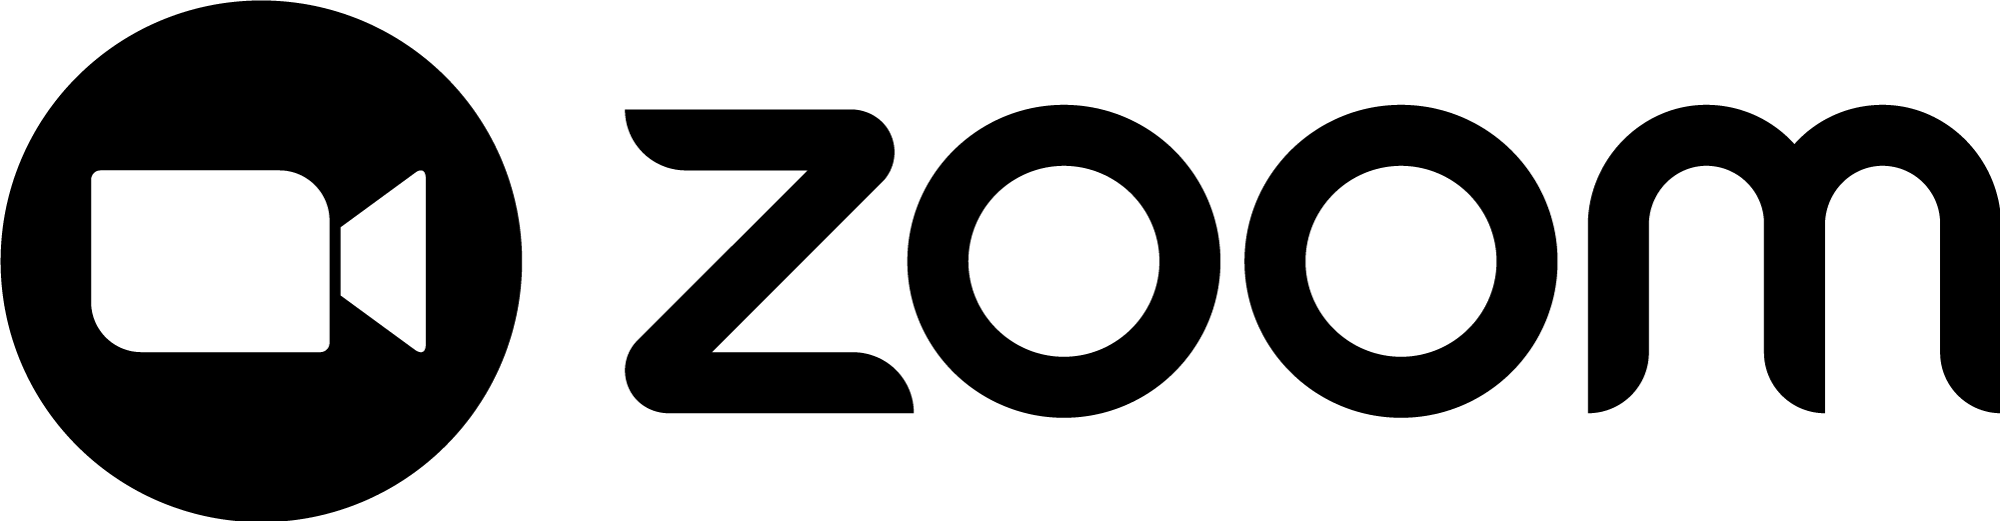 Zoom Logo Black And White